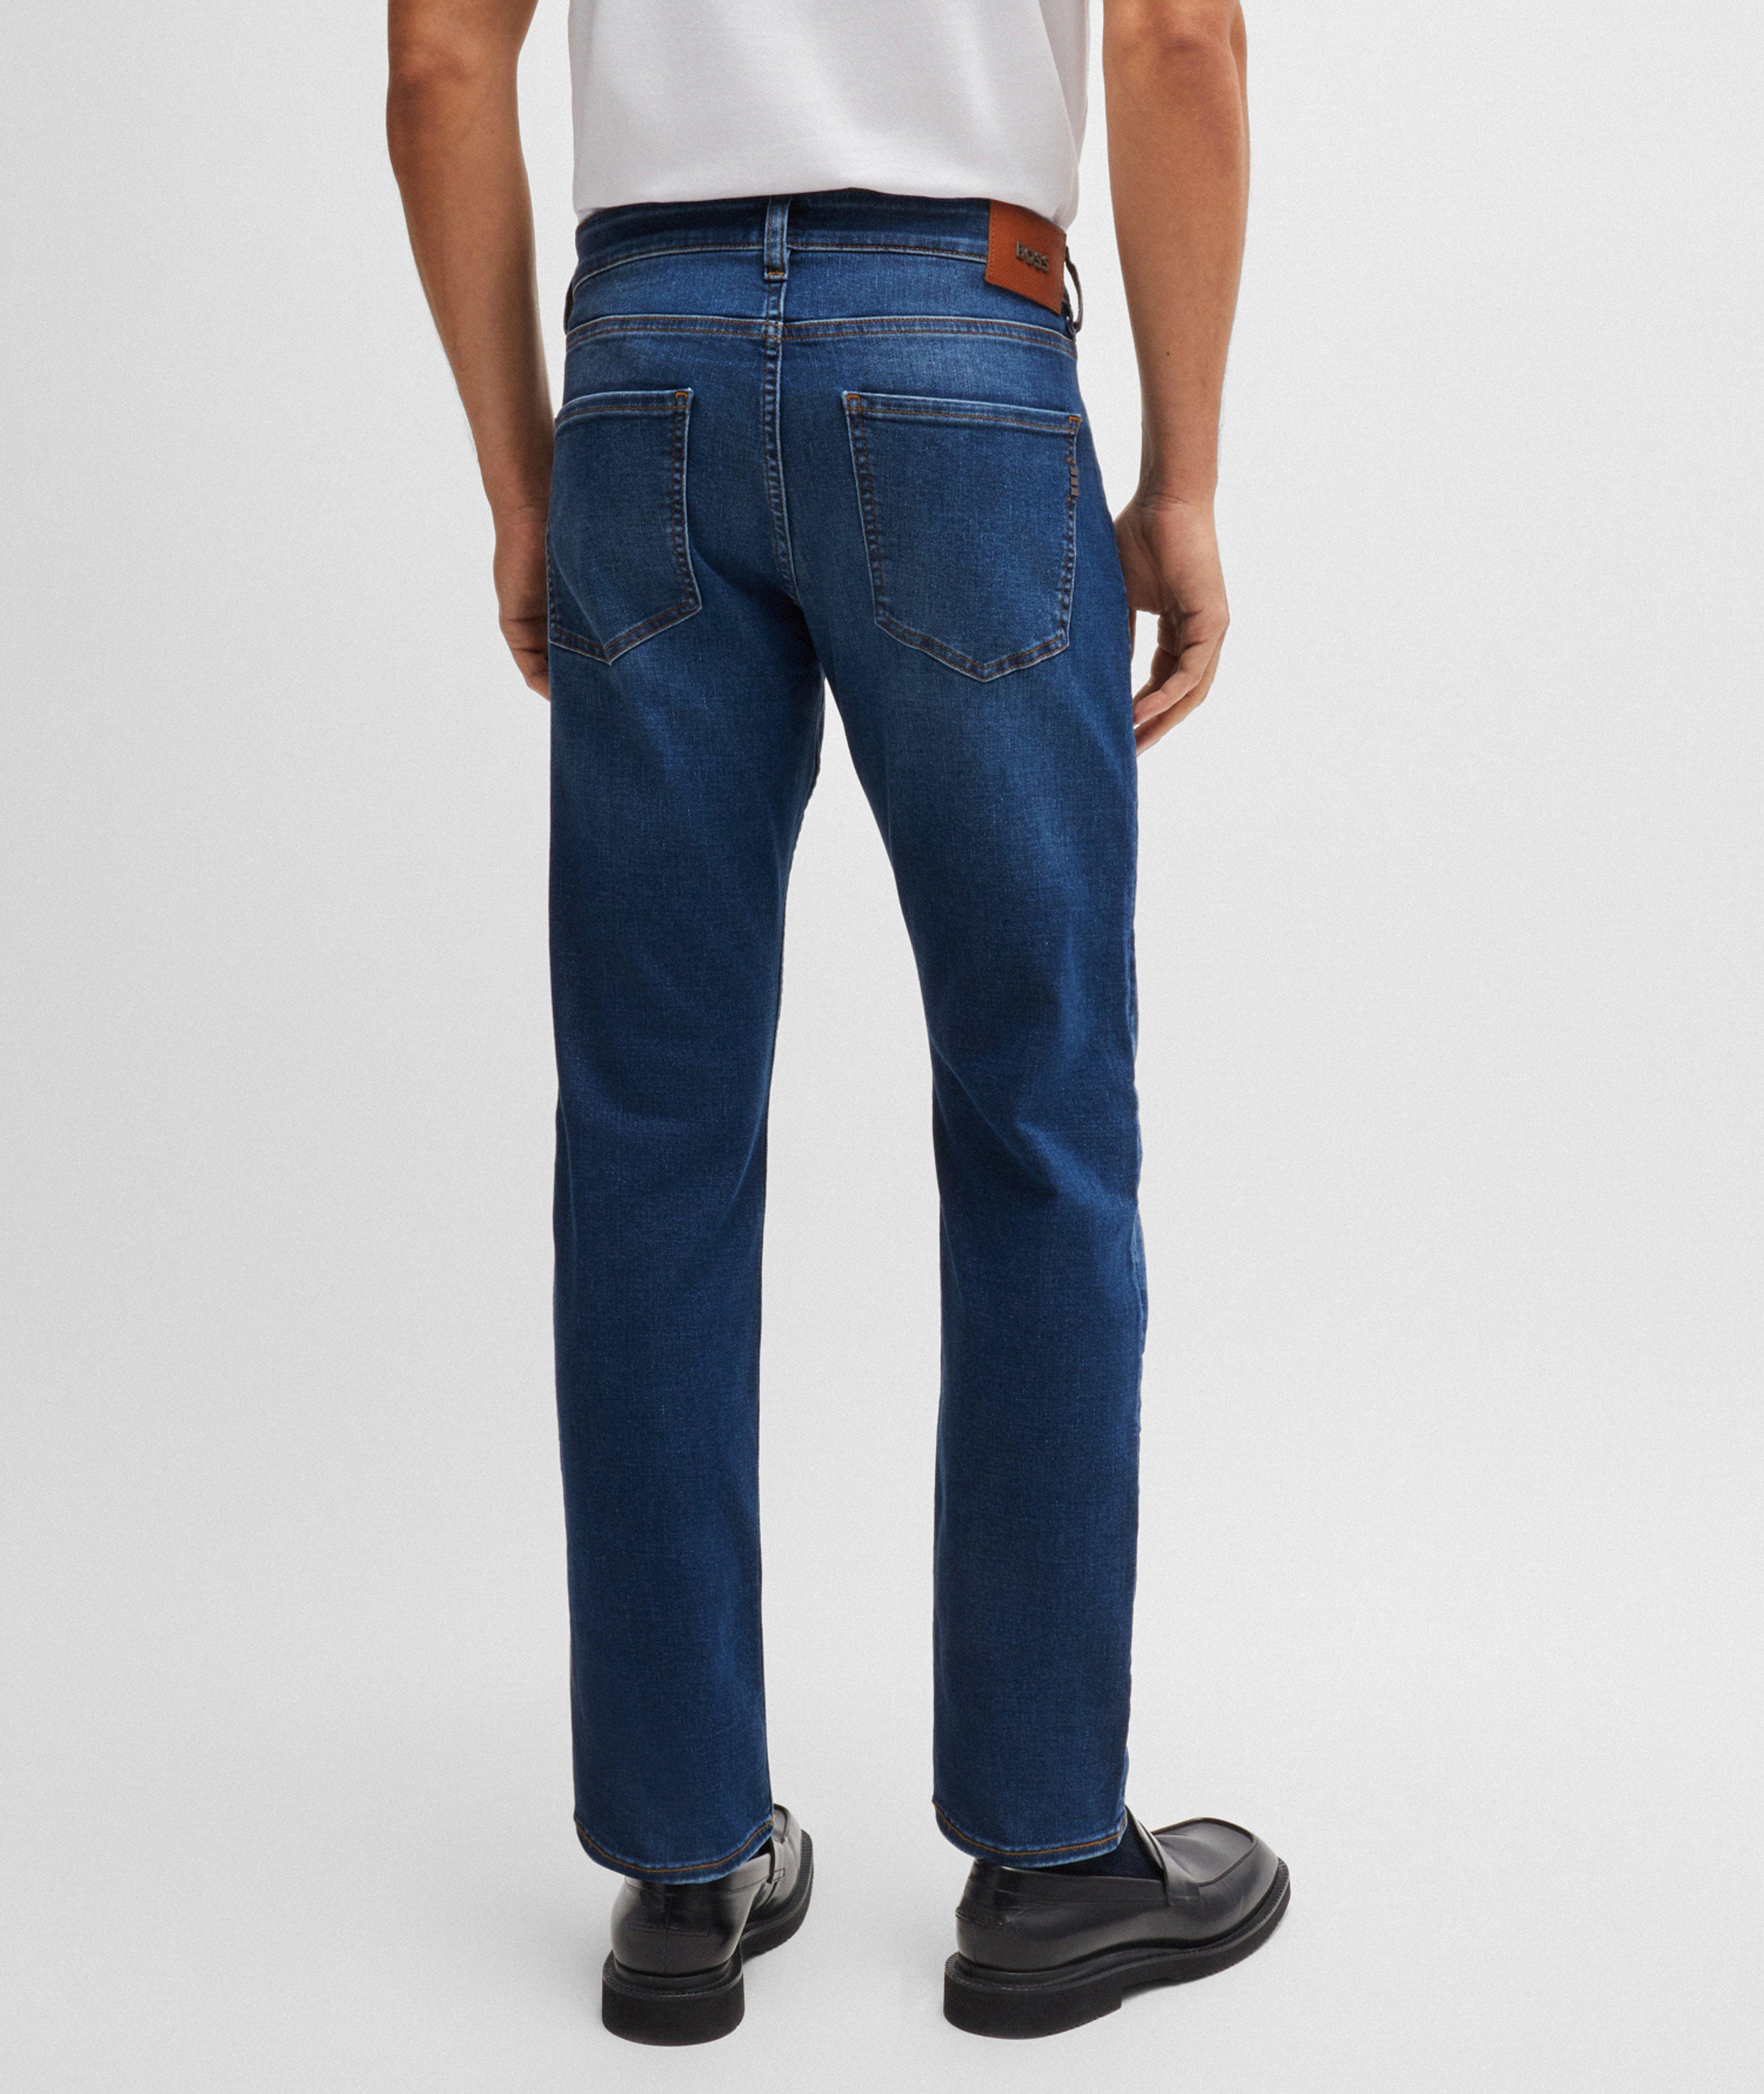 Delaware Cotton-Blend Jeans image 3